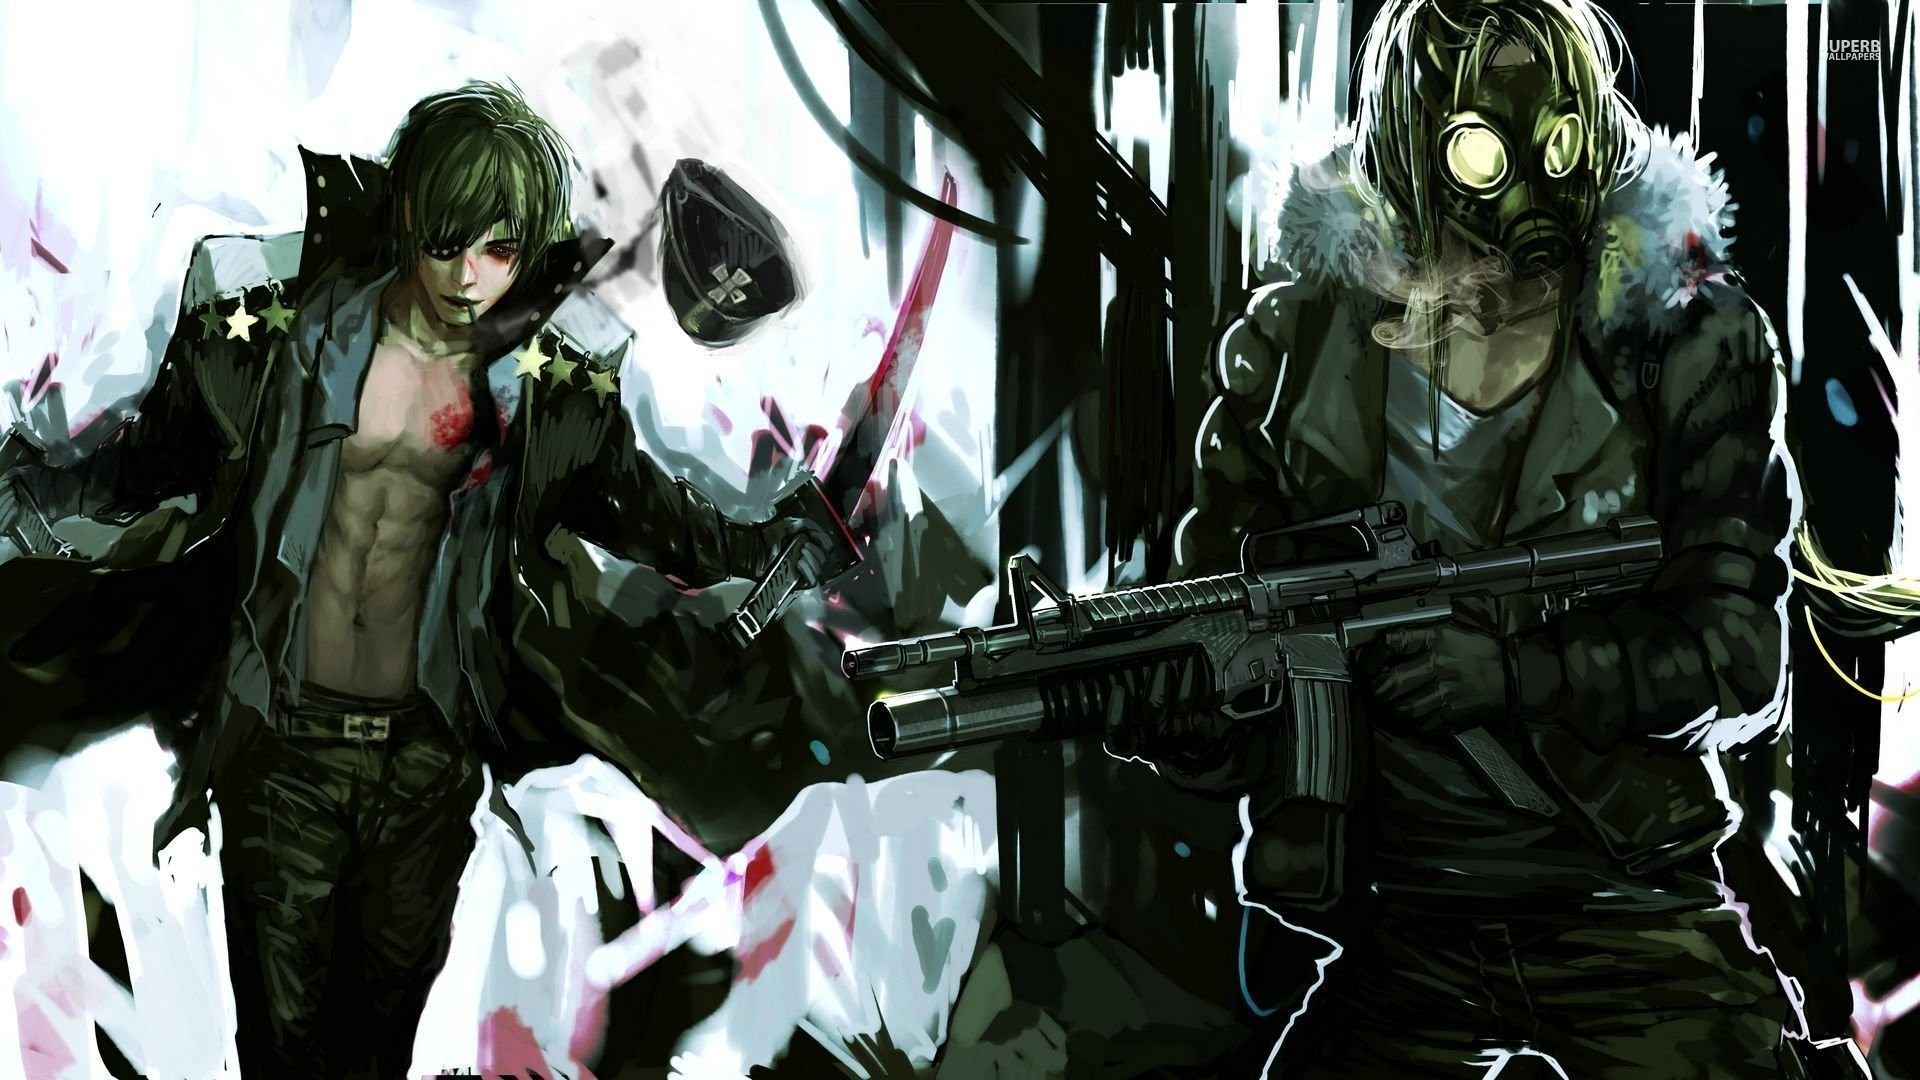 anime gun wallpaper,juego de acción y aventura,juego de pc,juego de disparos,juegos,cabello negro